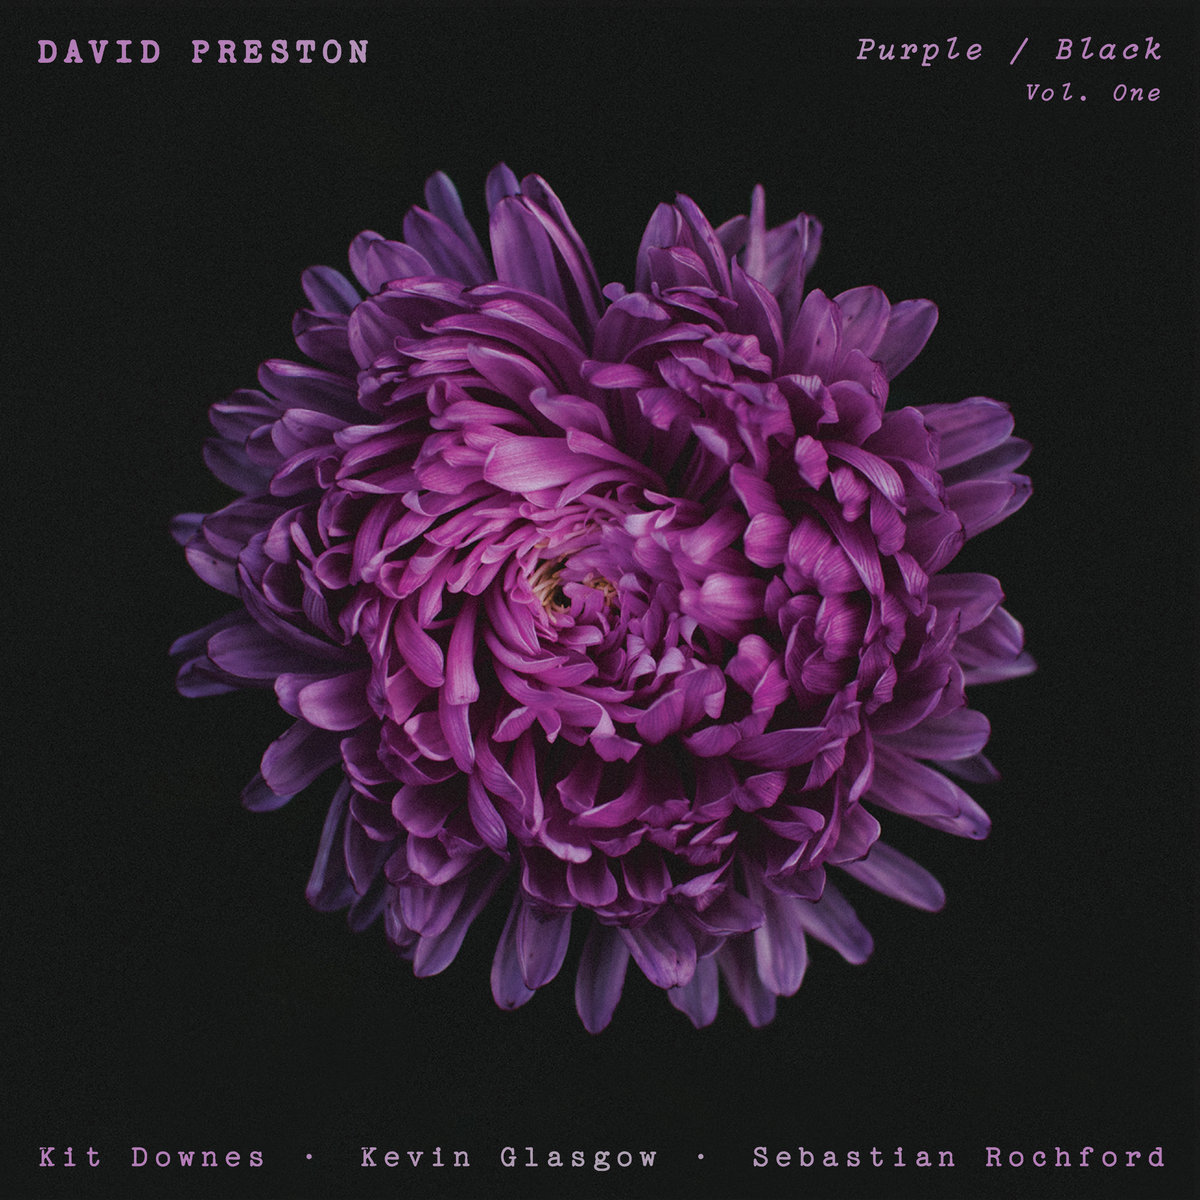 David Preston: New Album Release plus UK Tour News